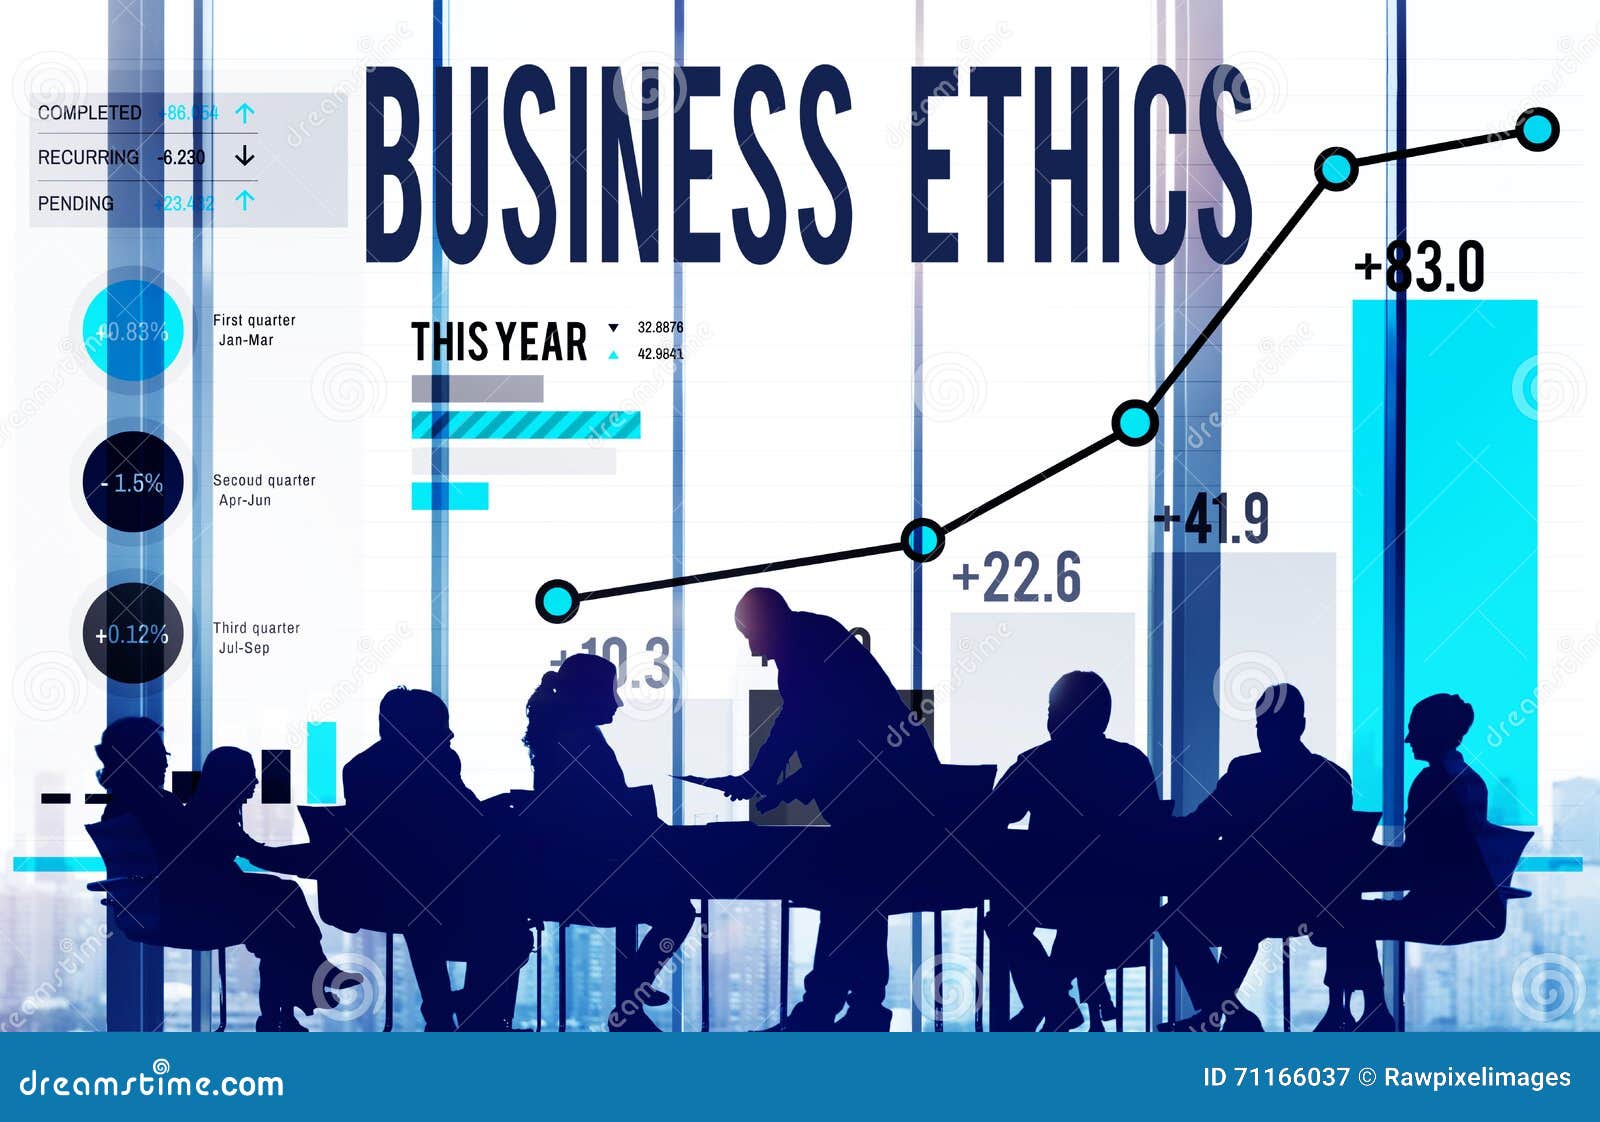 business ethnics philosophy responsibility honesty concept